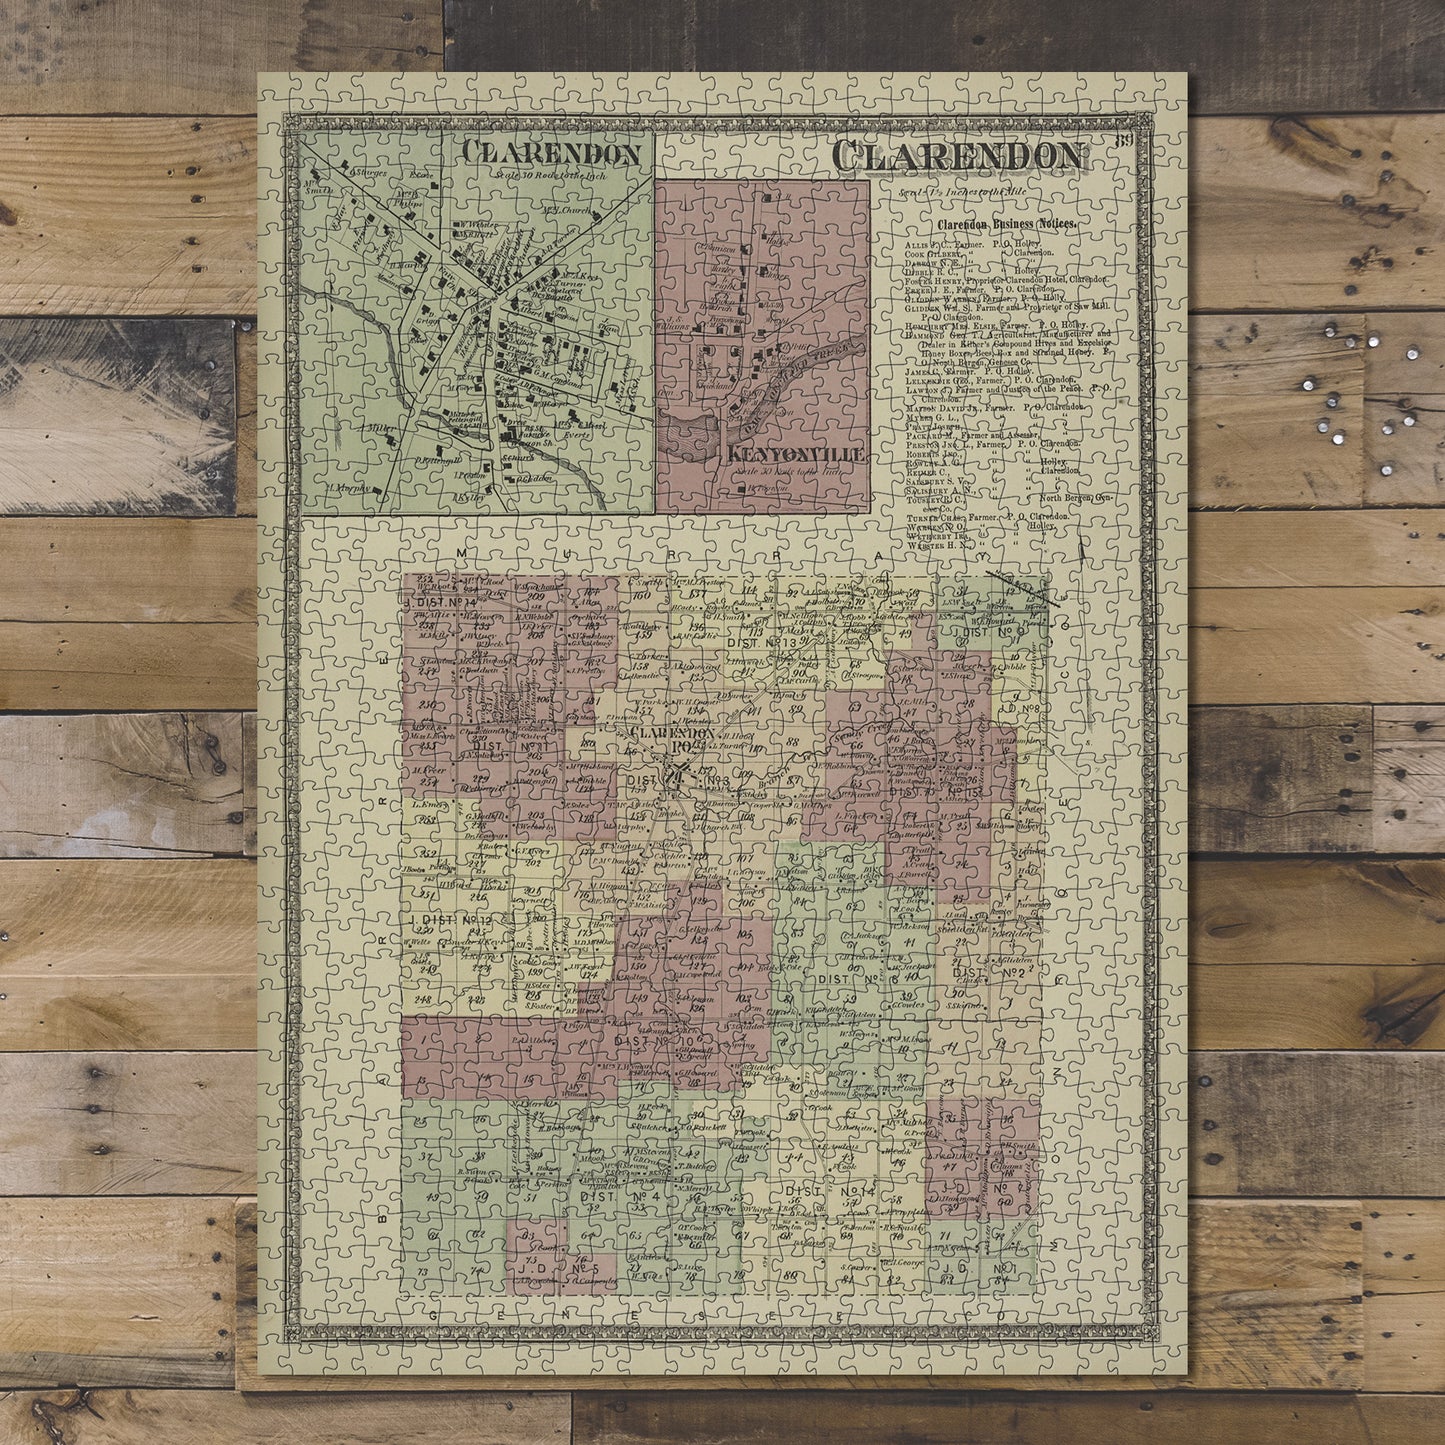 1000 Piece Jigsaw Puzzle 1875 Map of Philadelphia Clarendon Village Kenyonville Village